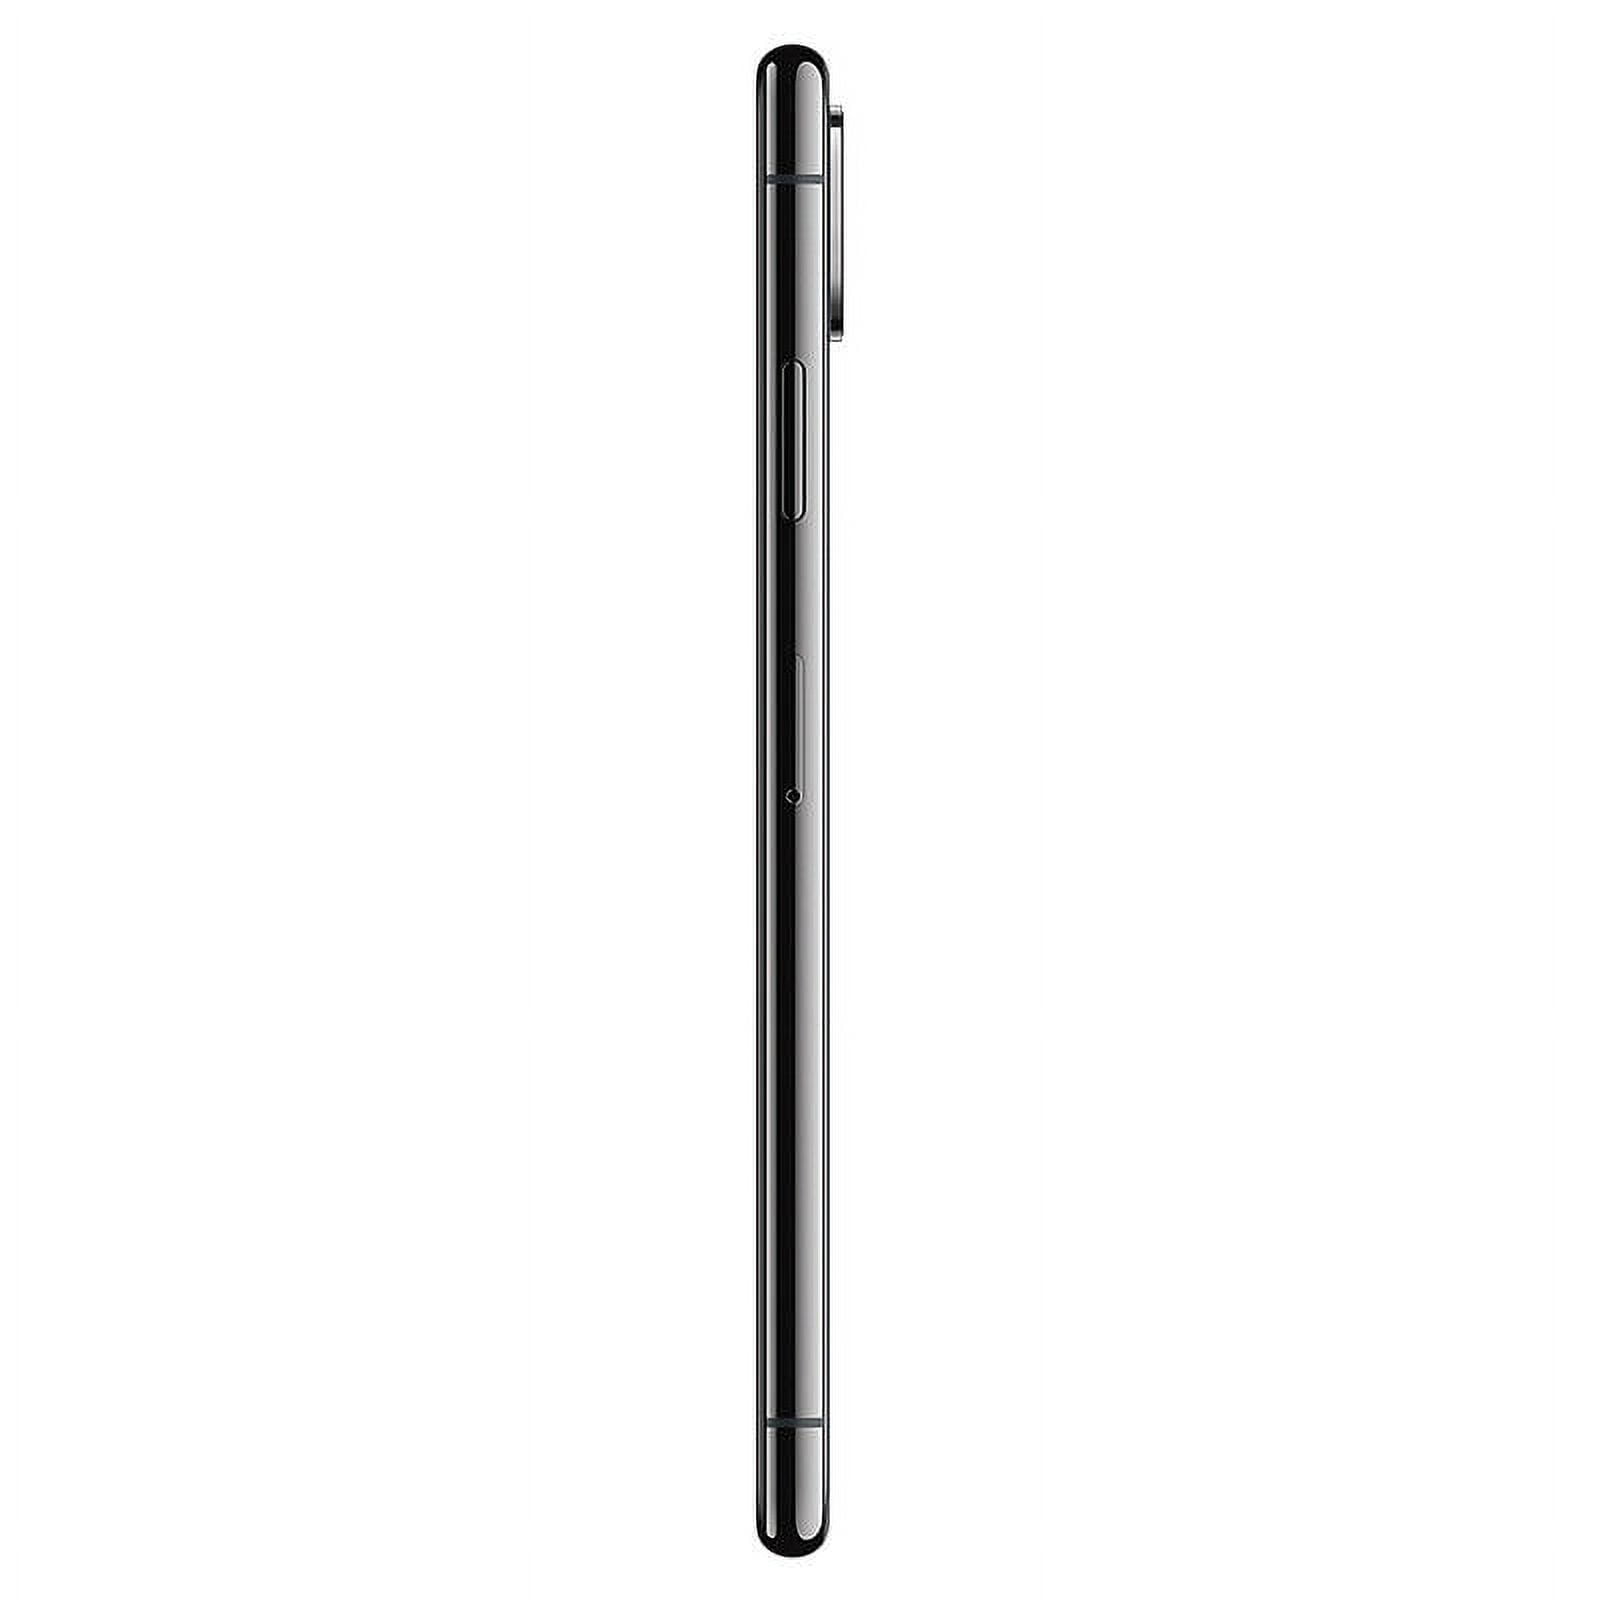 Apple iPhone XS Max, 64GB, Silver - Unlocked (Renewed)